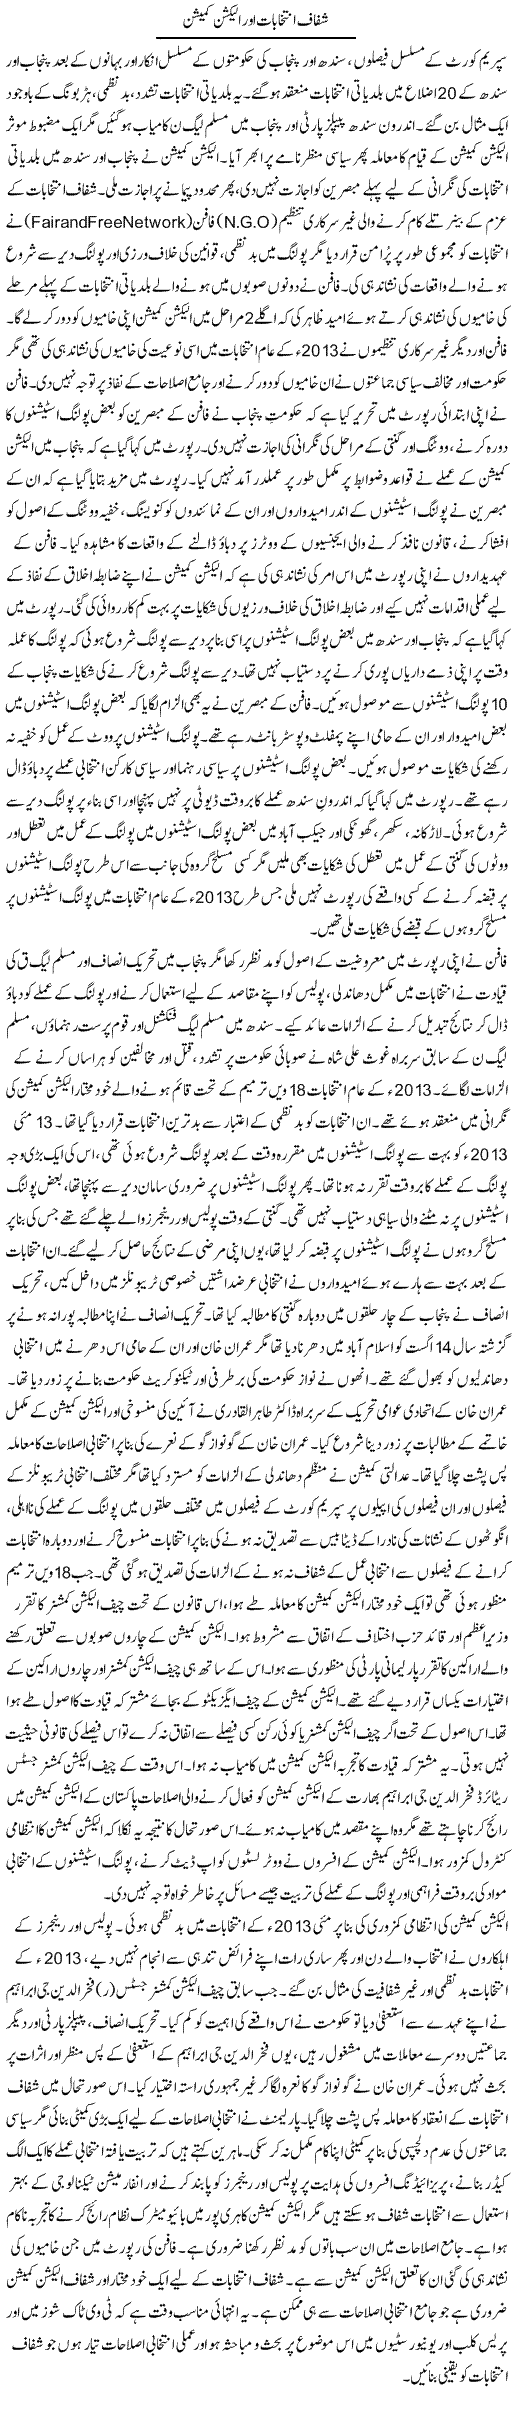 Shafaaf Intikhabaat Aur Election Commission | Tausif Ahmad Khan | Daily Urdu Columns